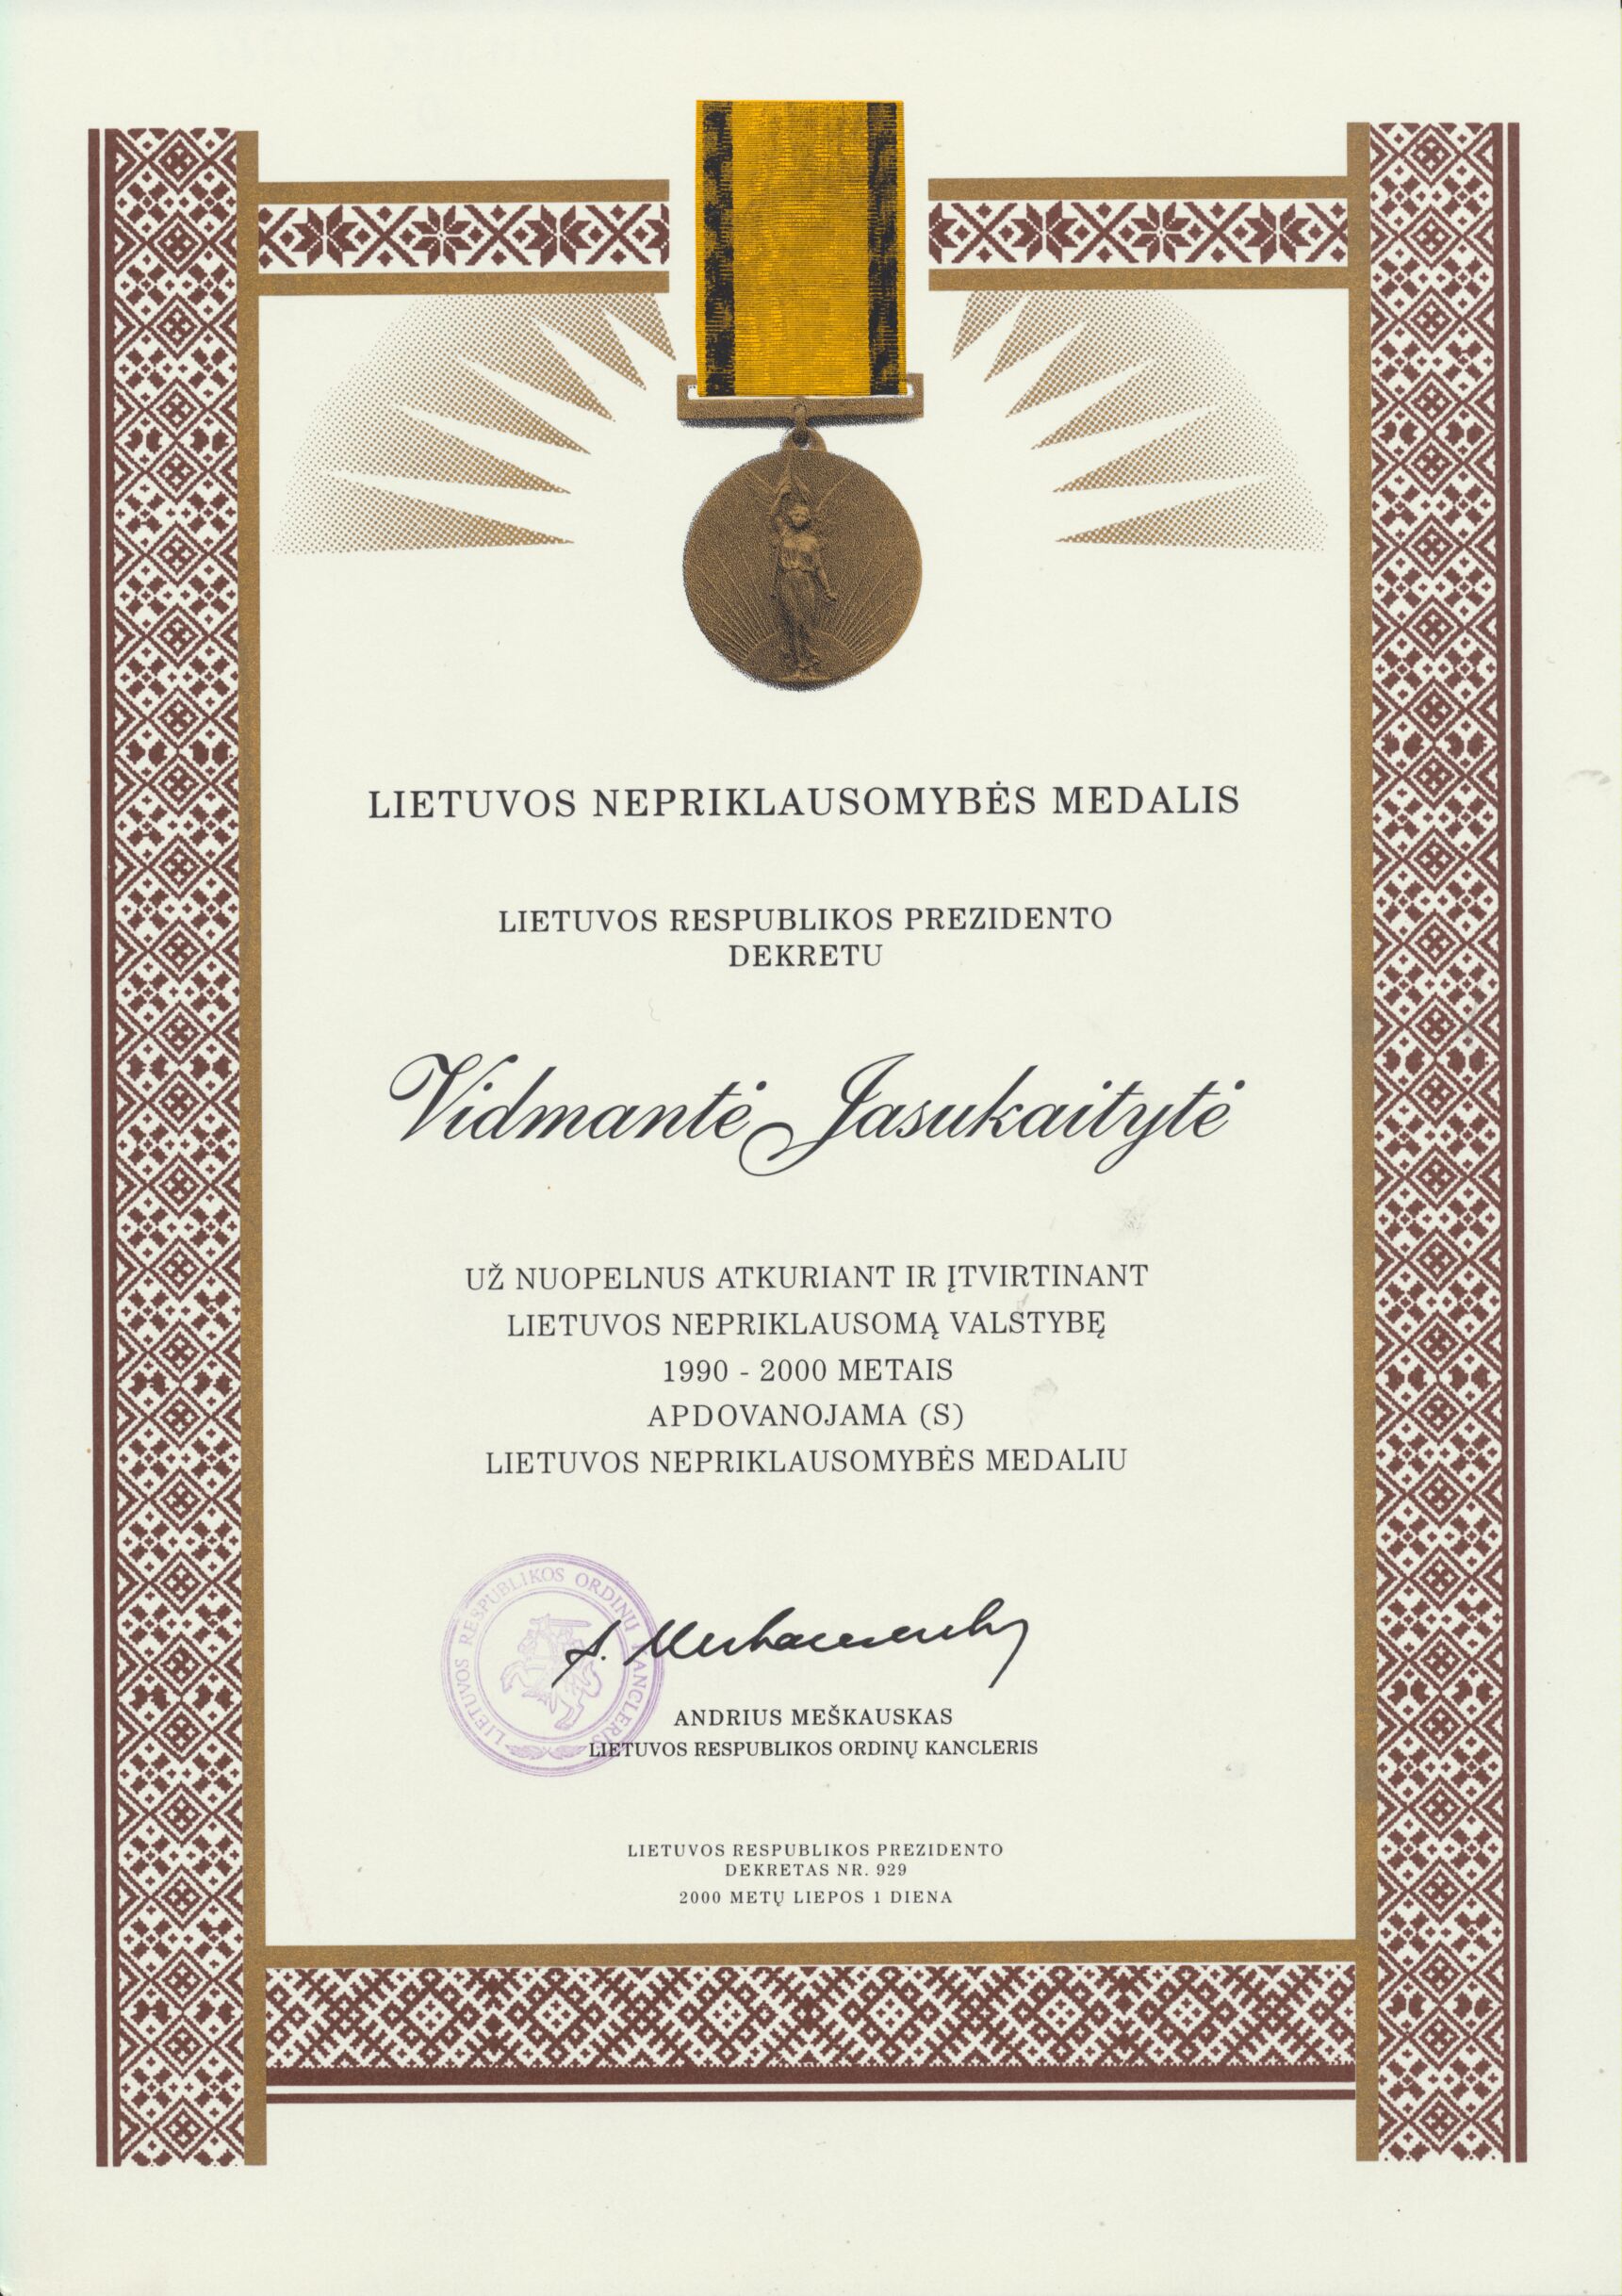 LR prezidento dekretas dėl V. Jasukaitytės apdovanojimo Lietuvos nepriklausomybės medaliu. 2000 07 01. MLLM GEK 137781